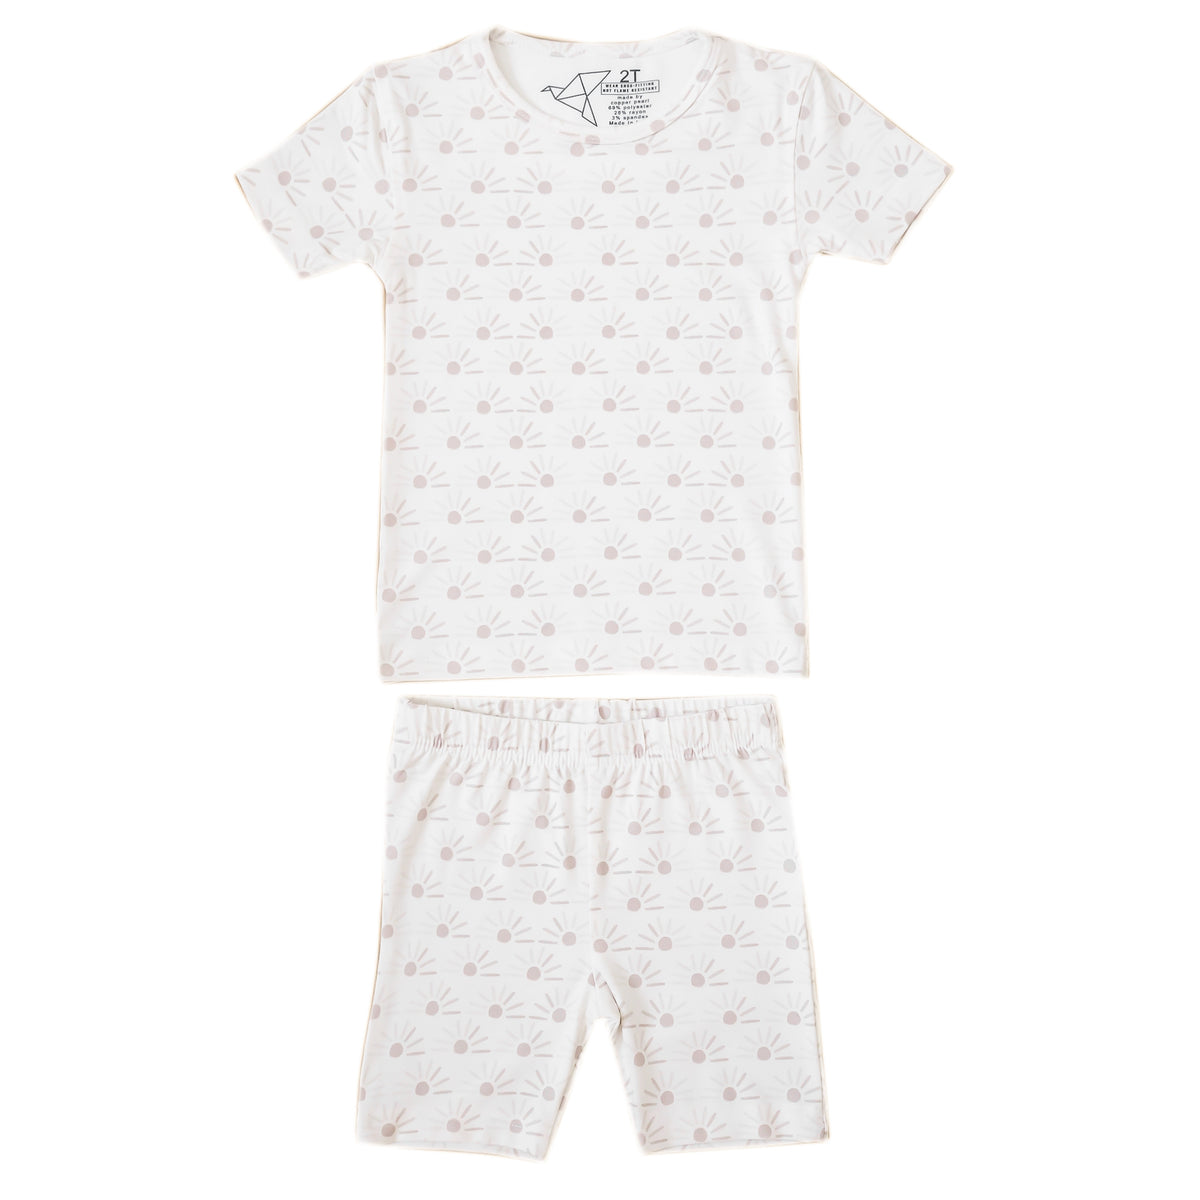 2pc Short Sleeve Pajama Set - Shine